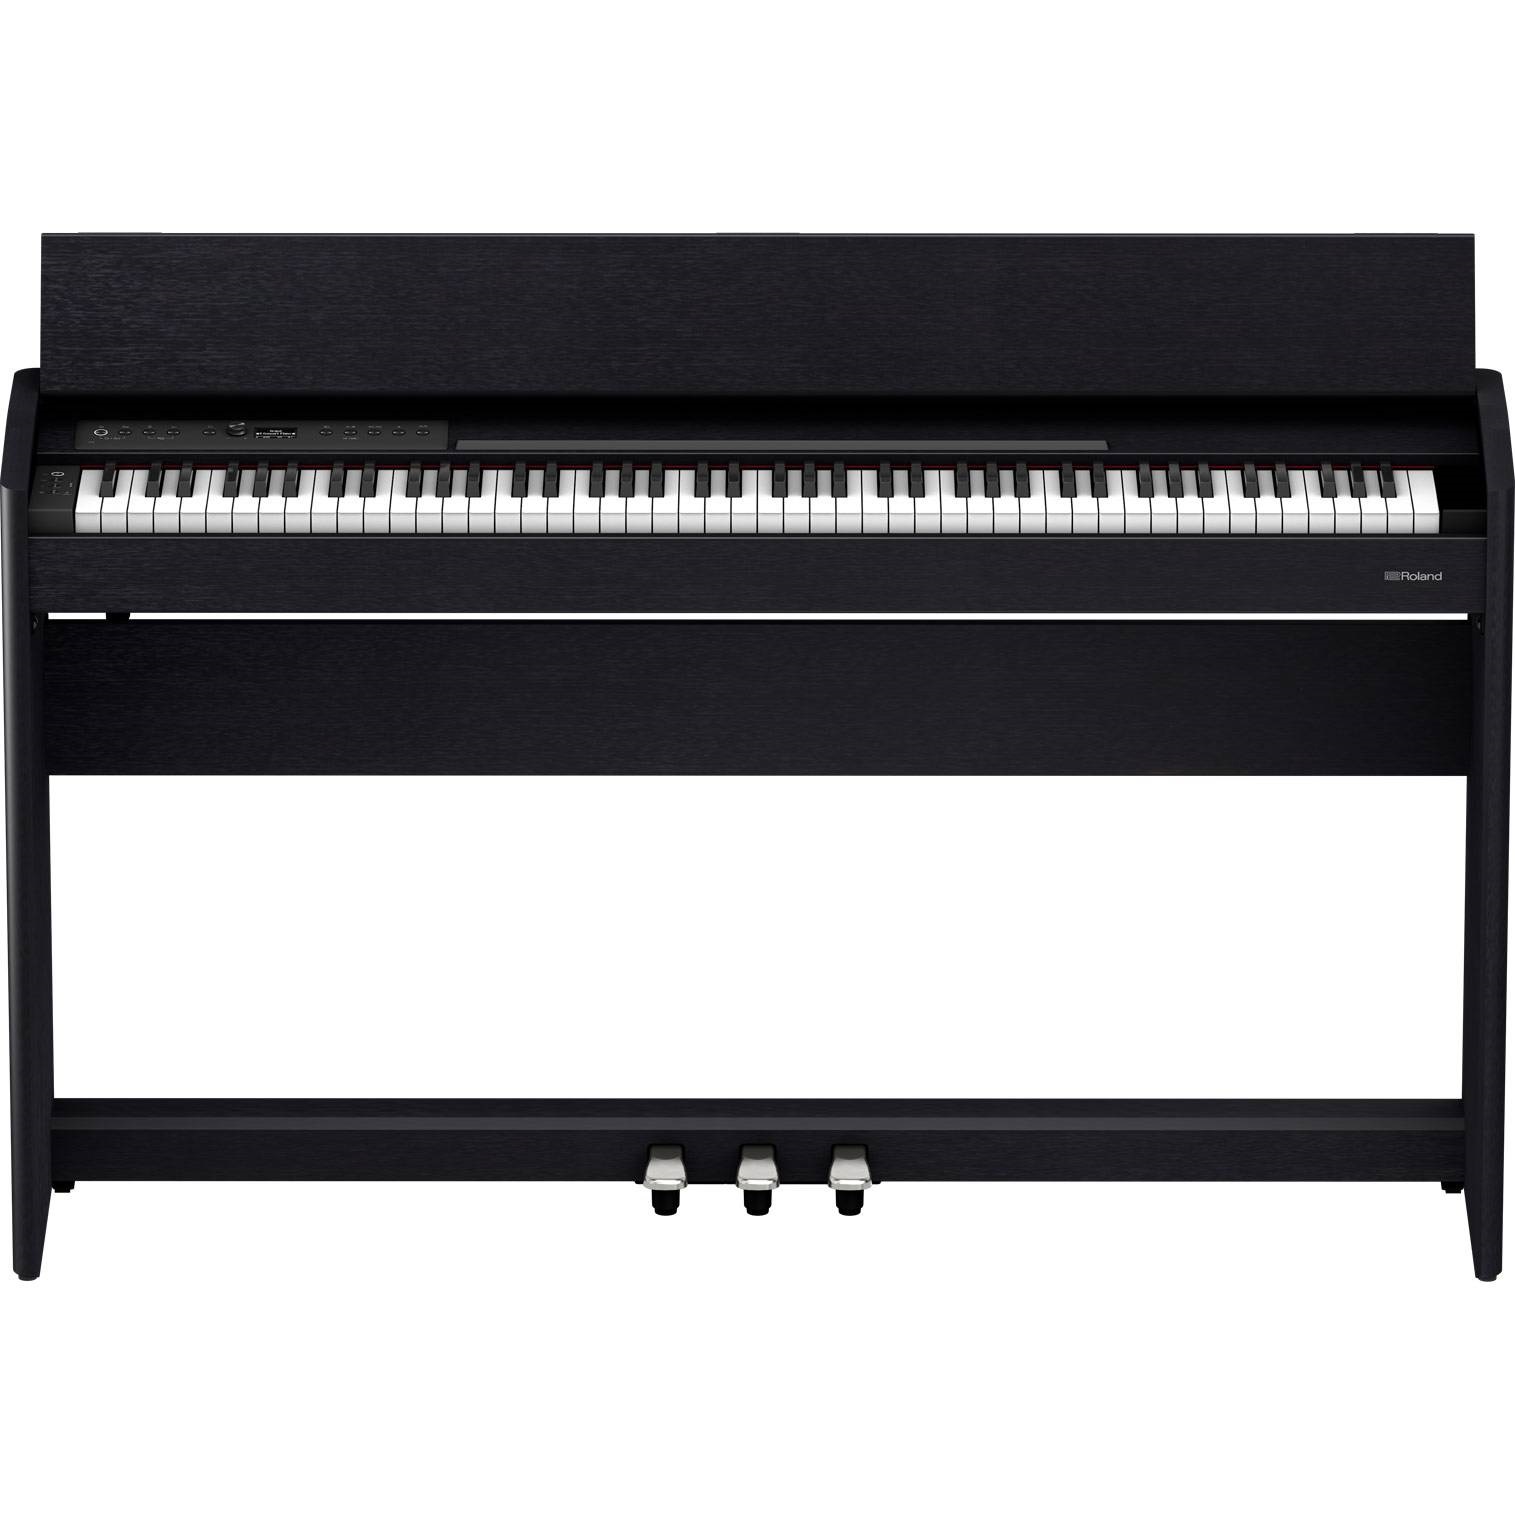 پیانو دیجیتال رولند مدل F701